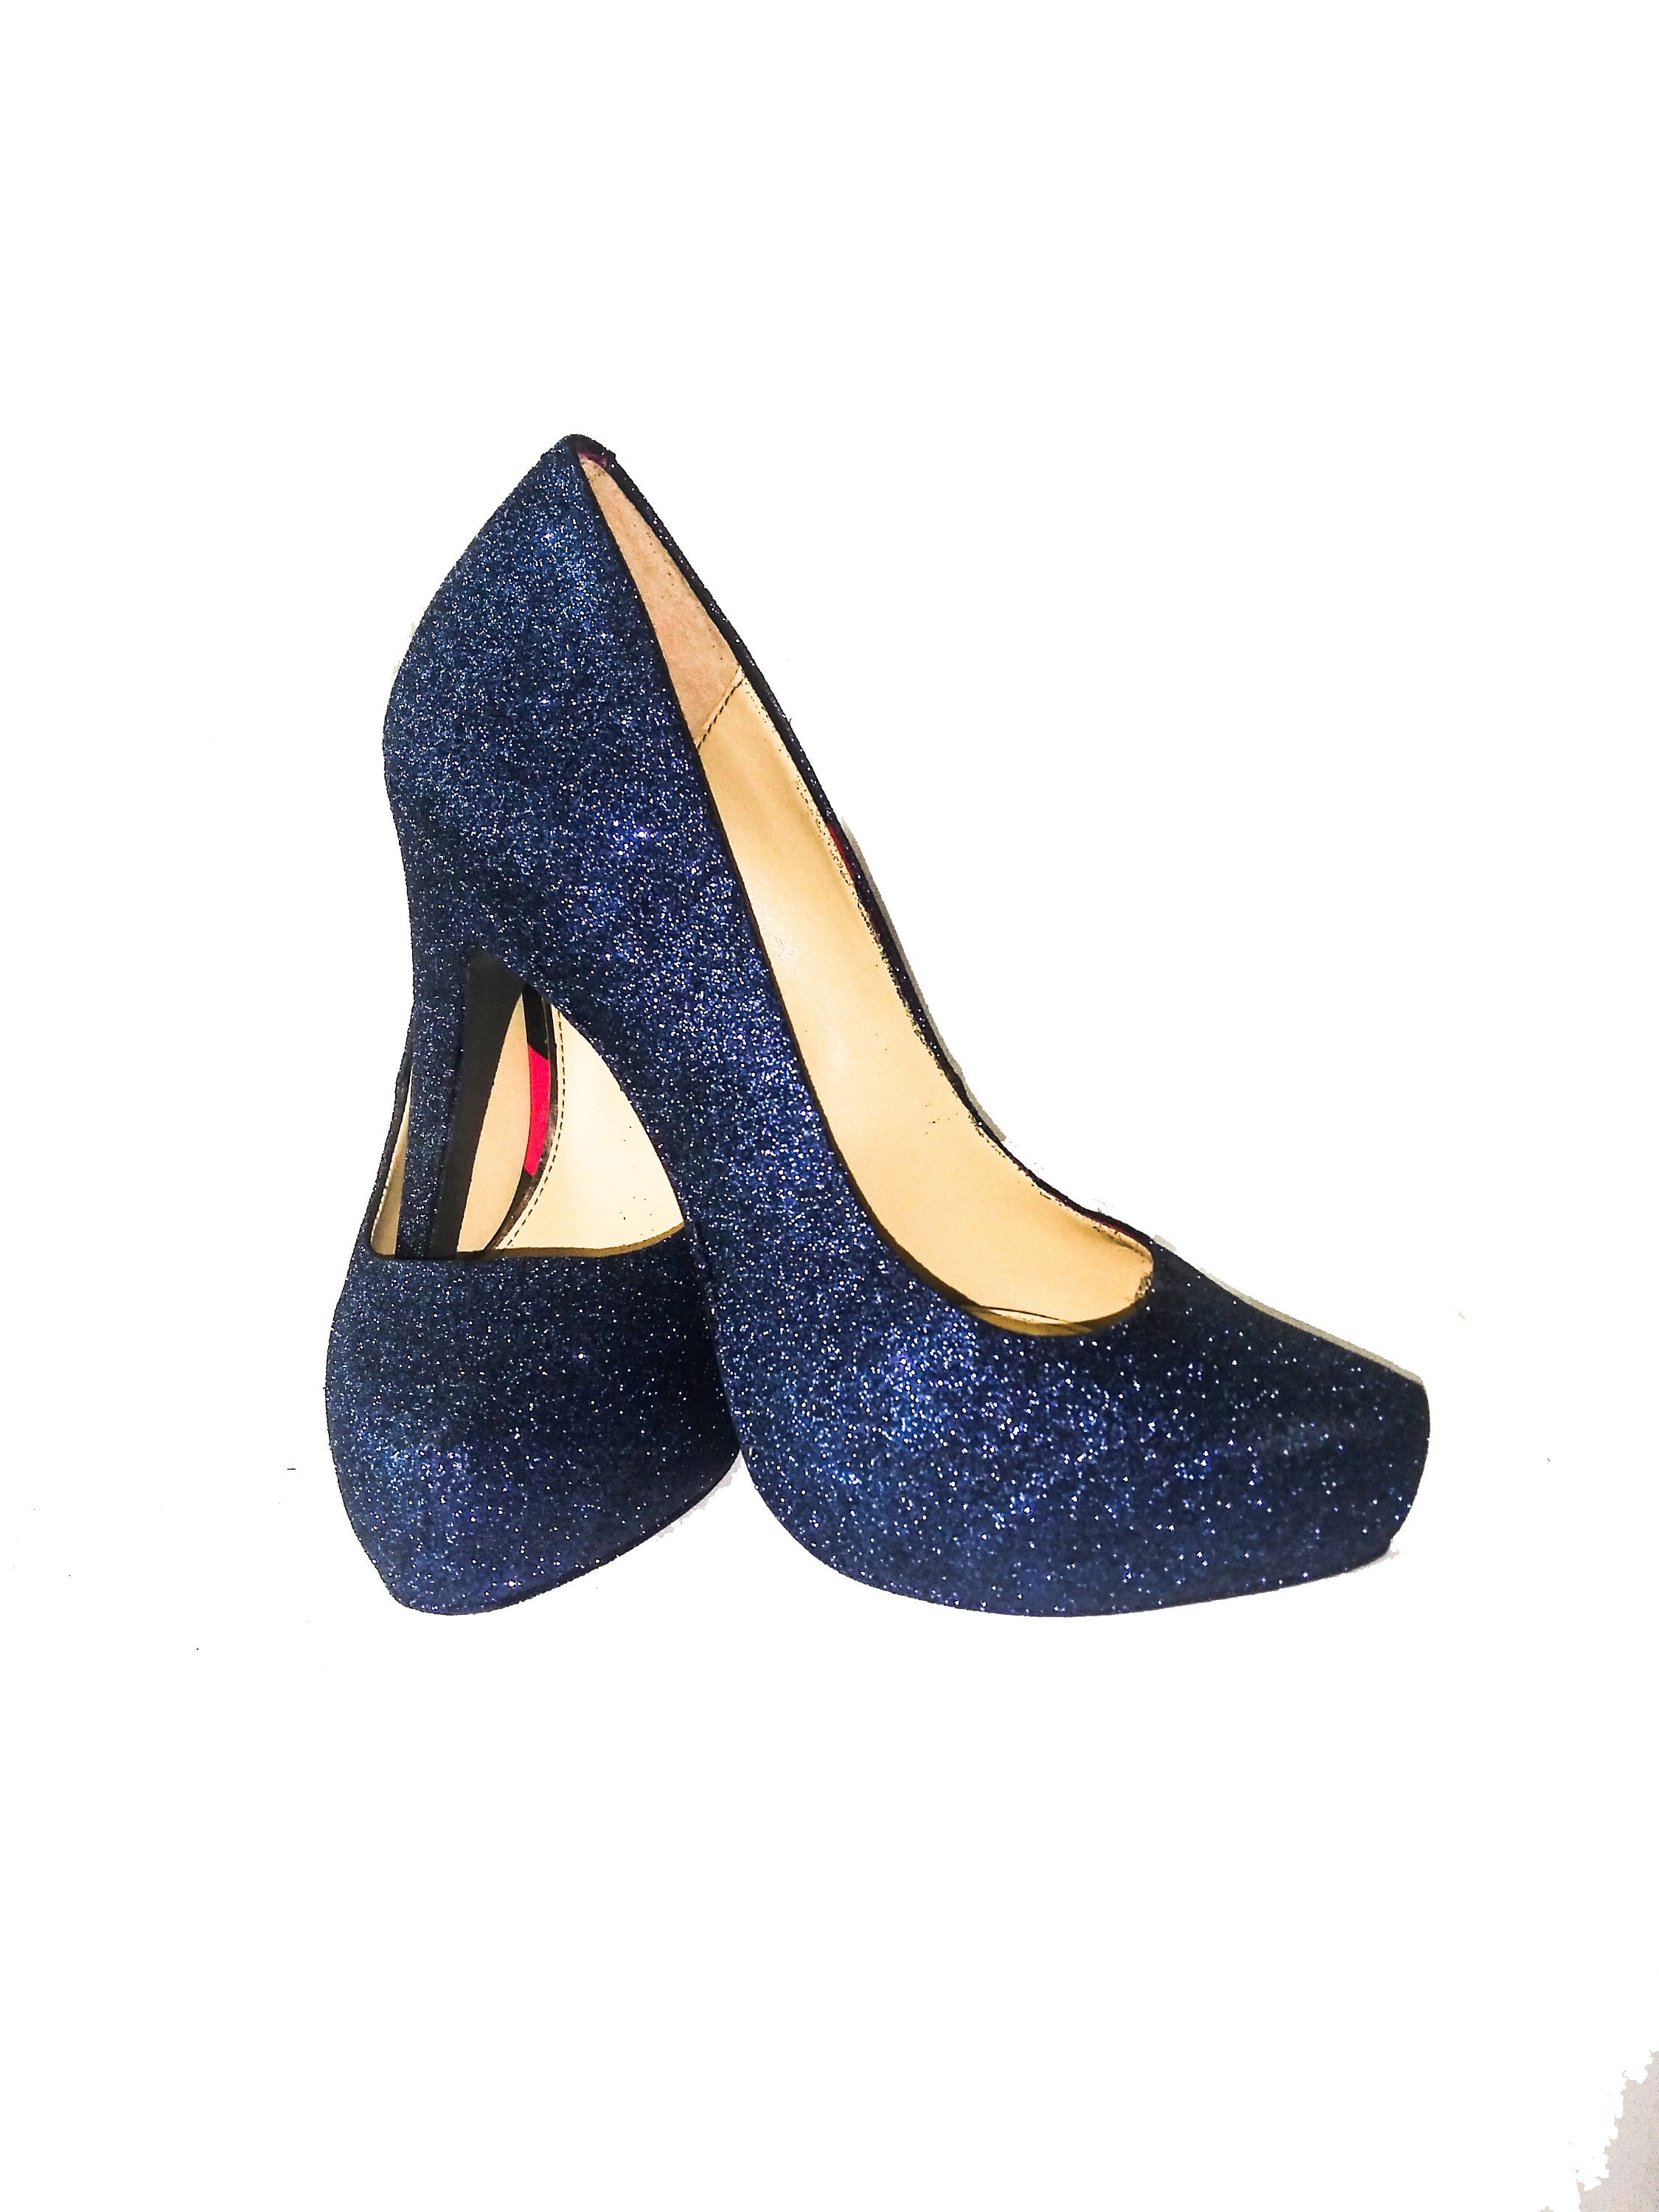 Pretty blue heels | Wedding shoes, Blue wedding shoes, Sparkle heels